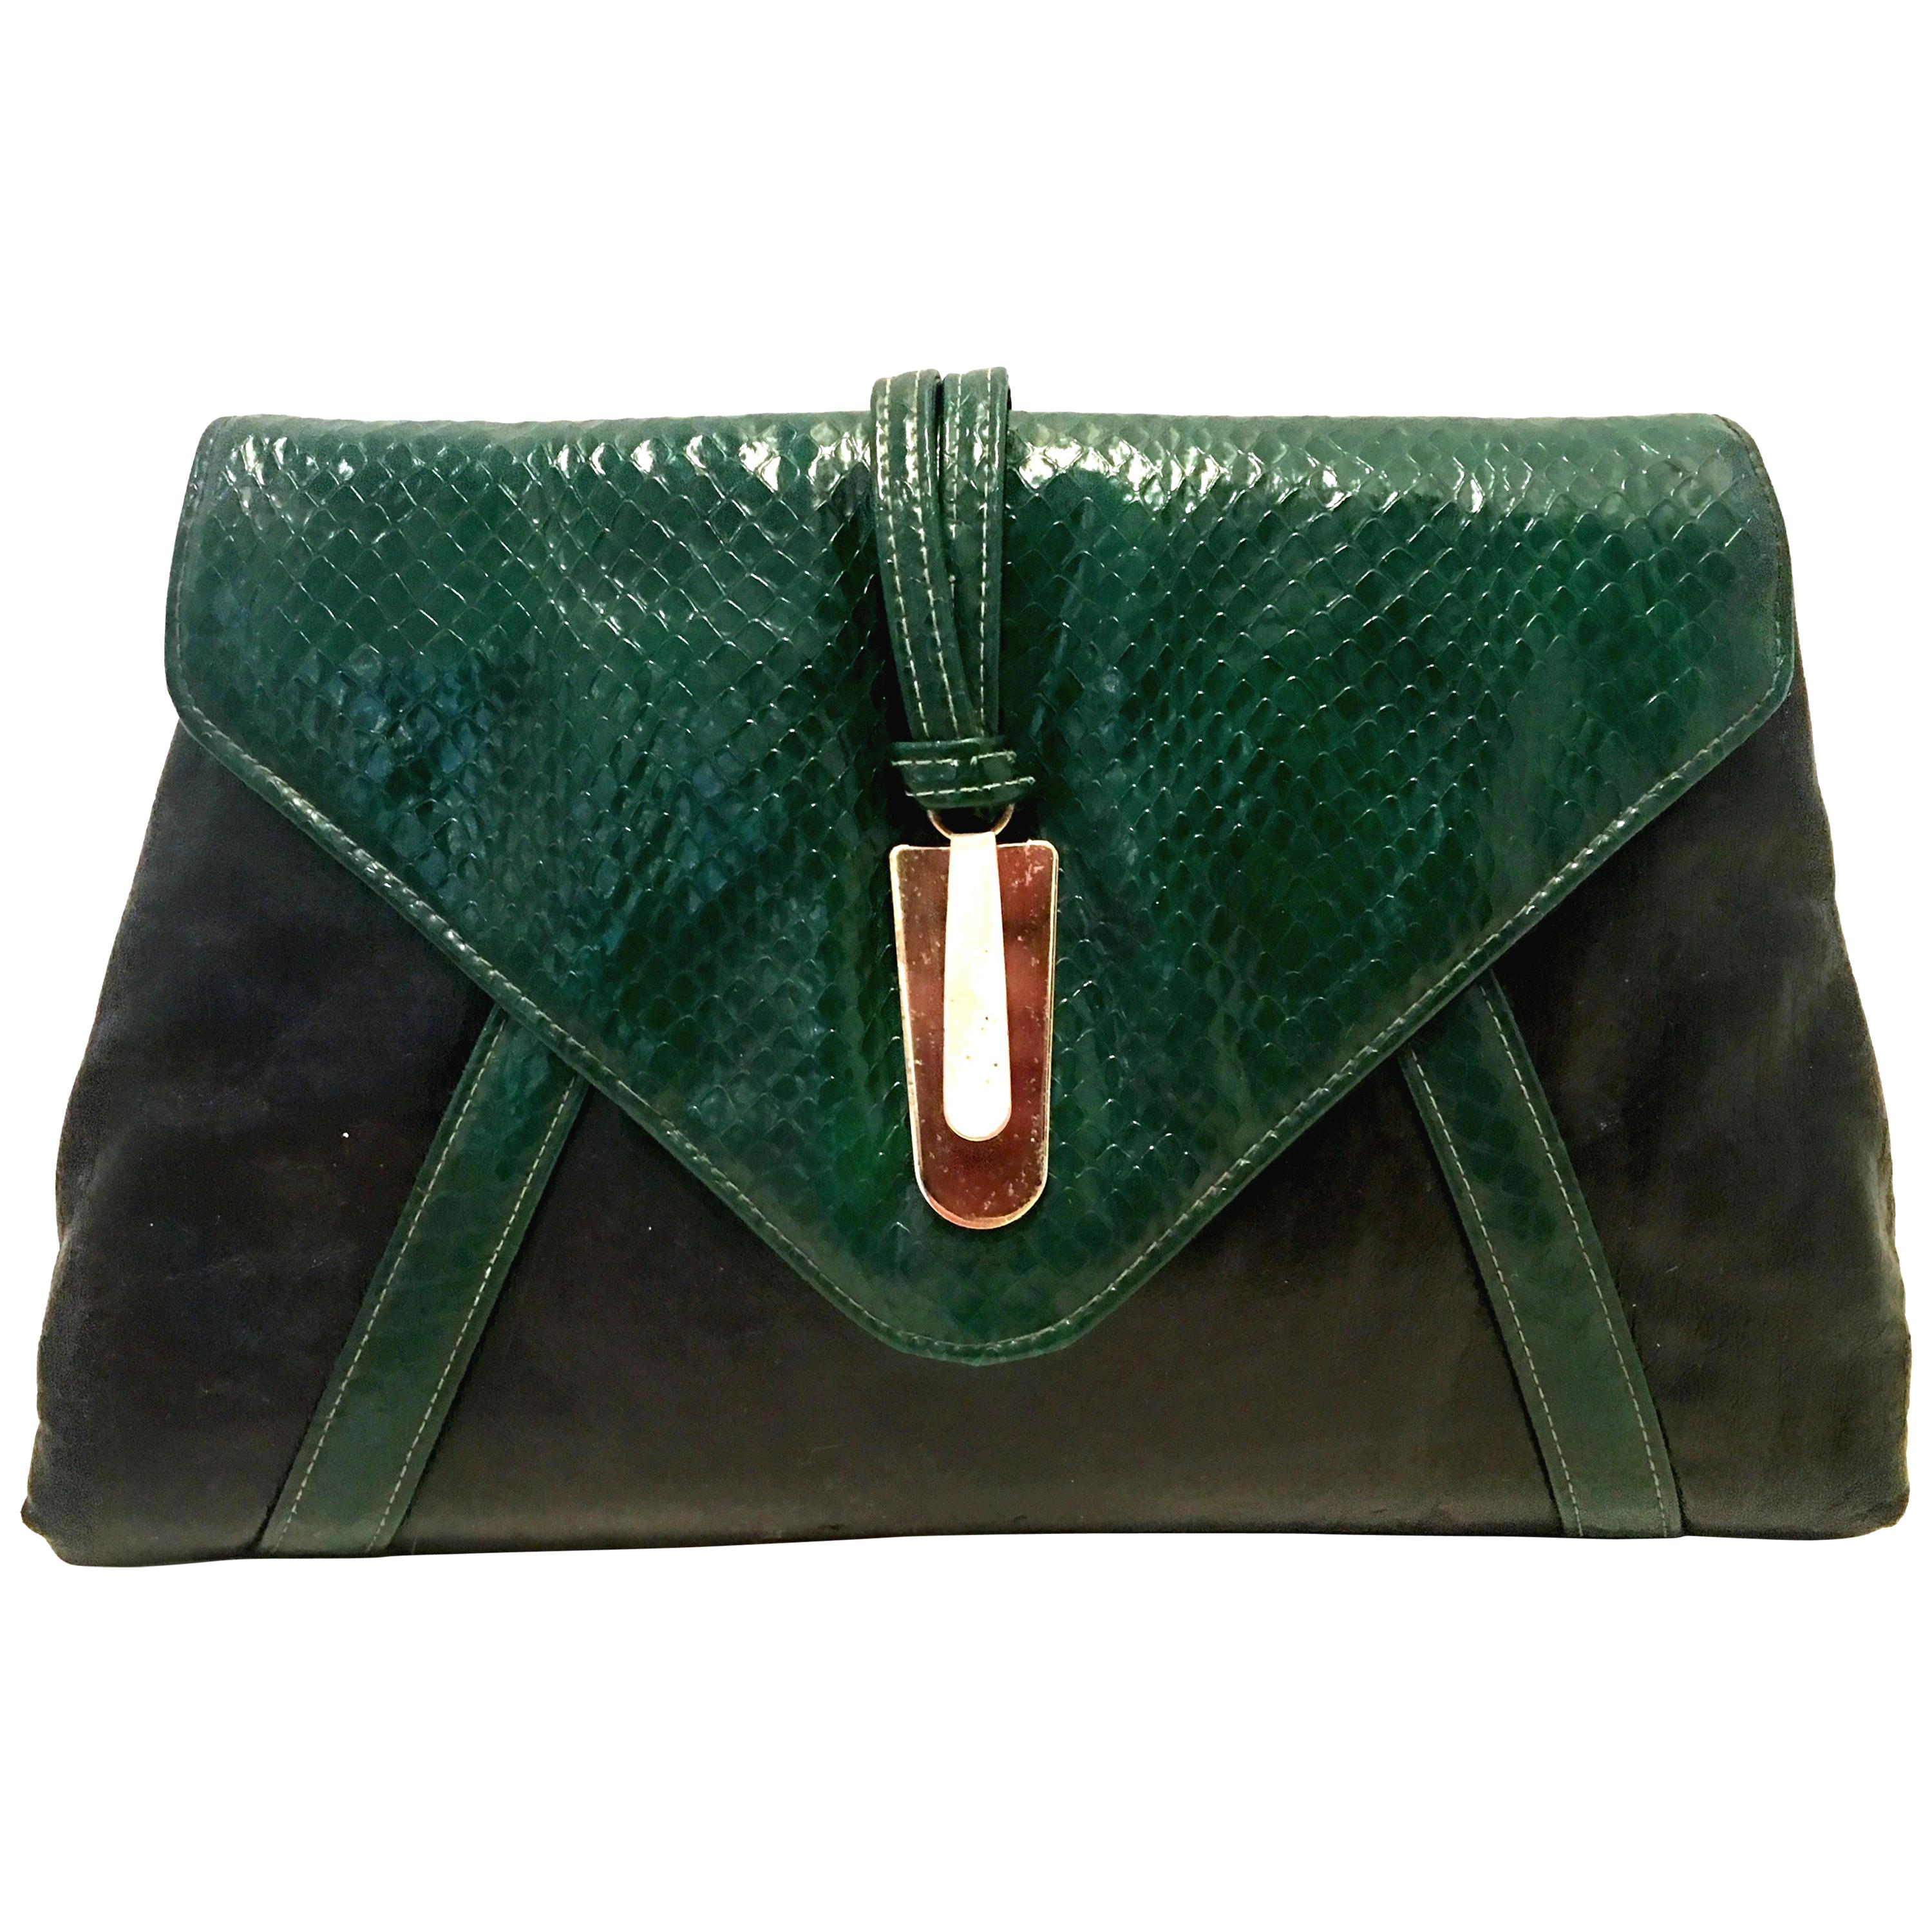 20th Century Leather & Python Clutch Handbag By, Harry Levine